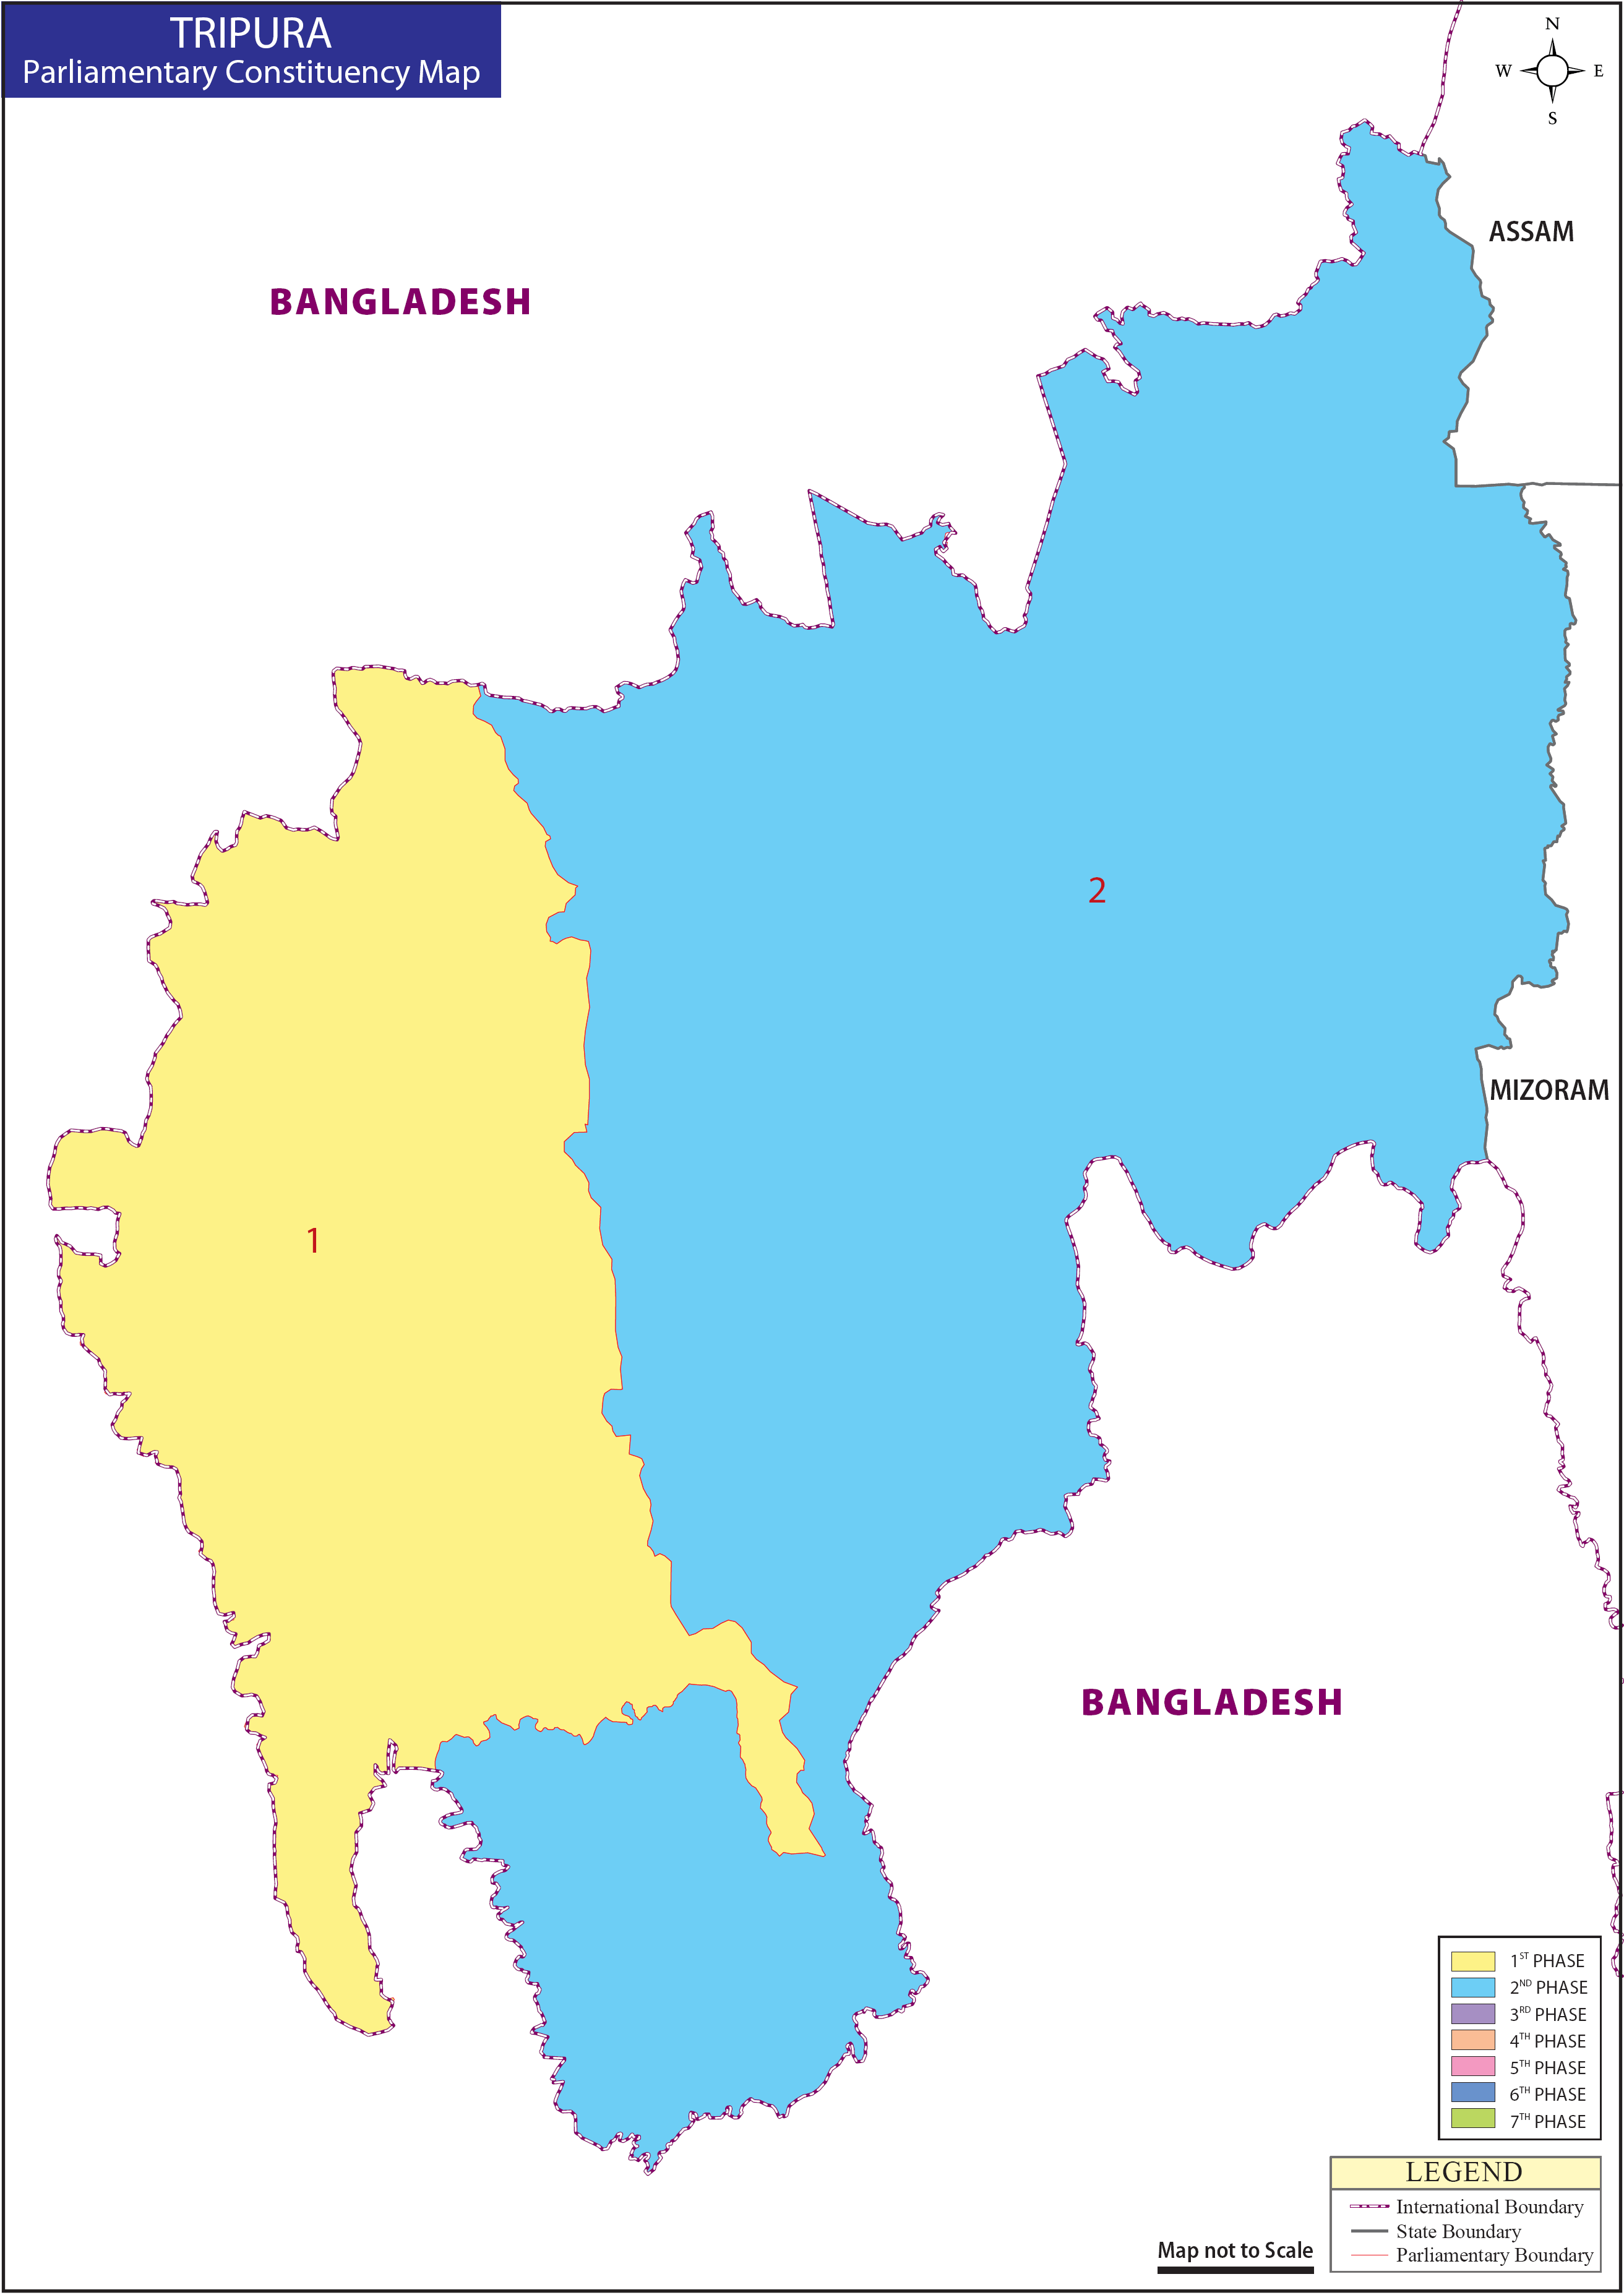 Tripura Parliamentary Constituency Map